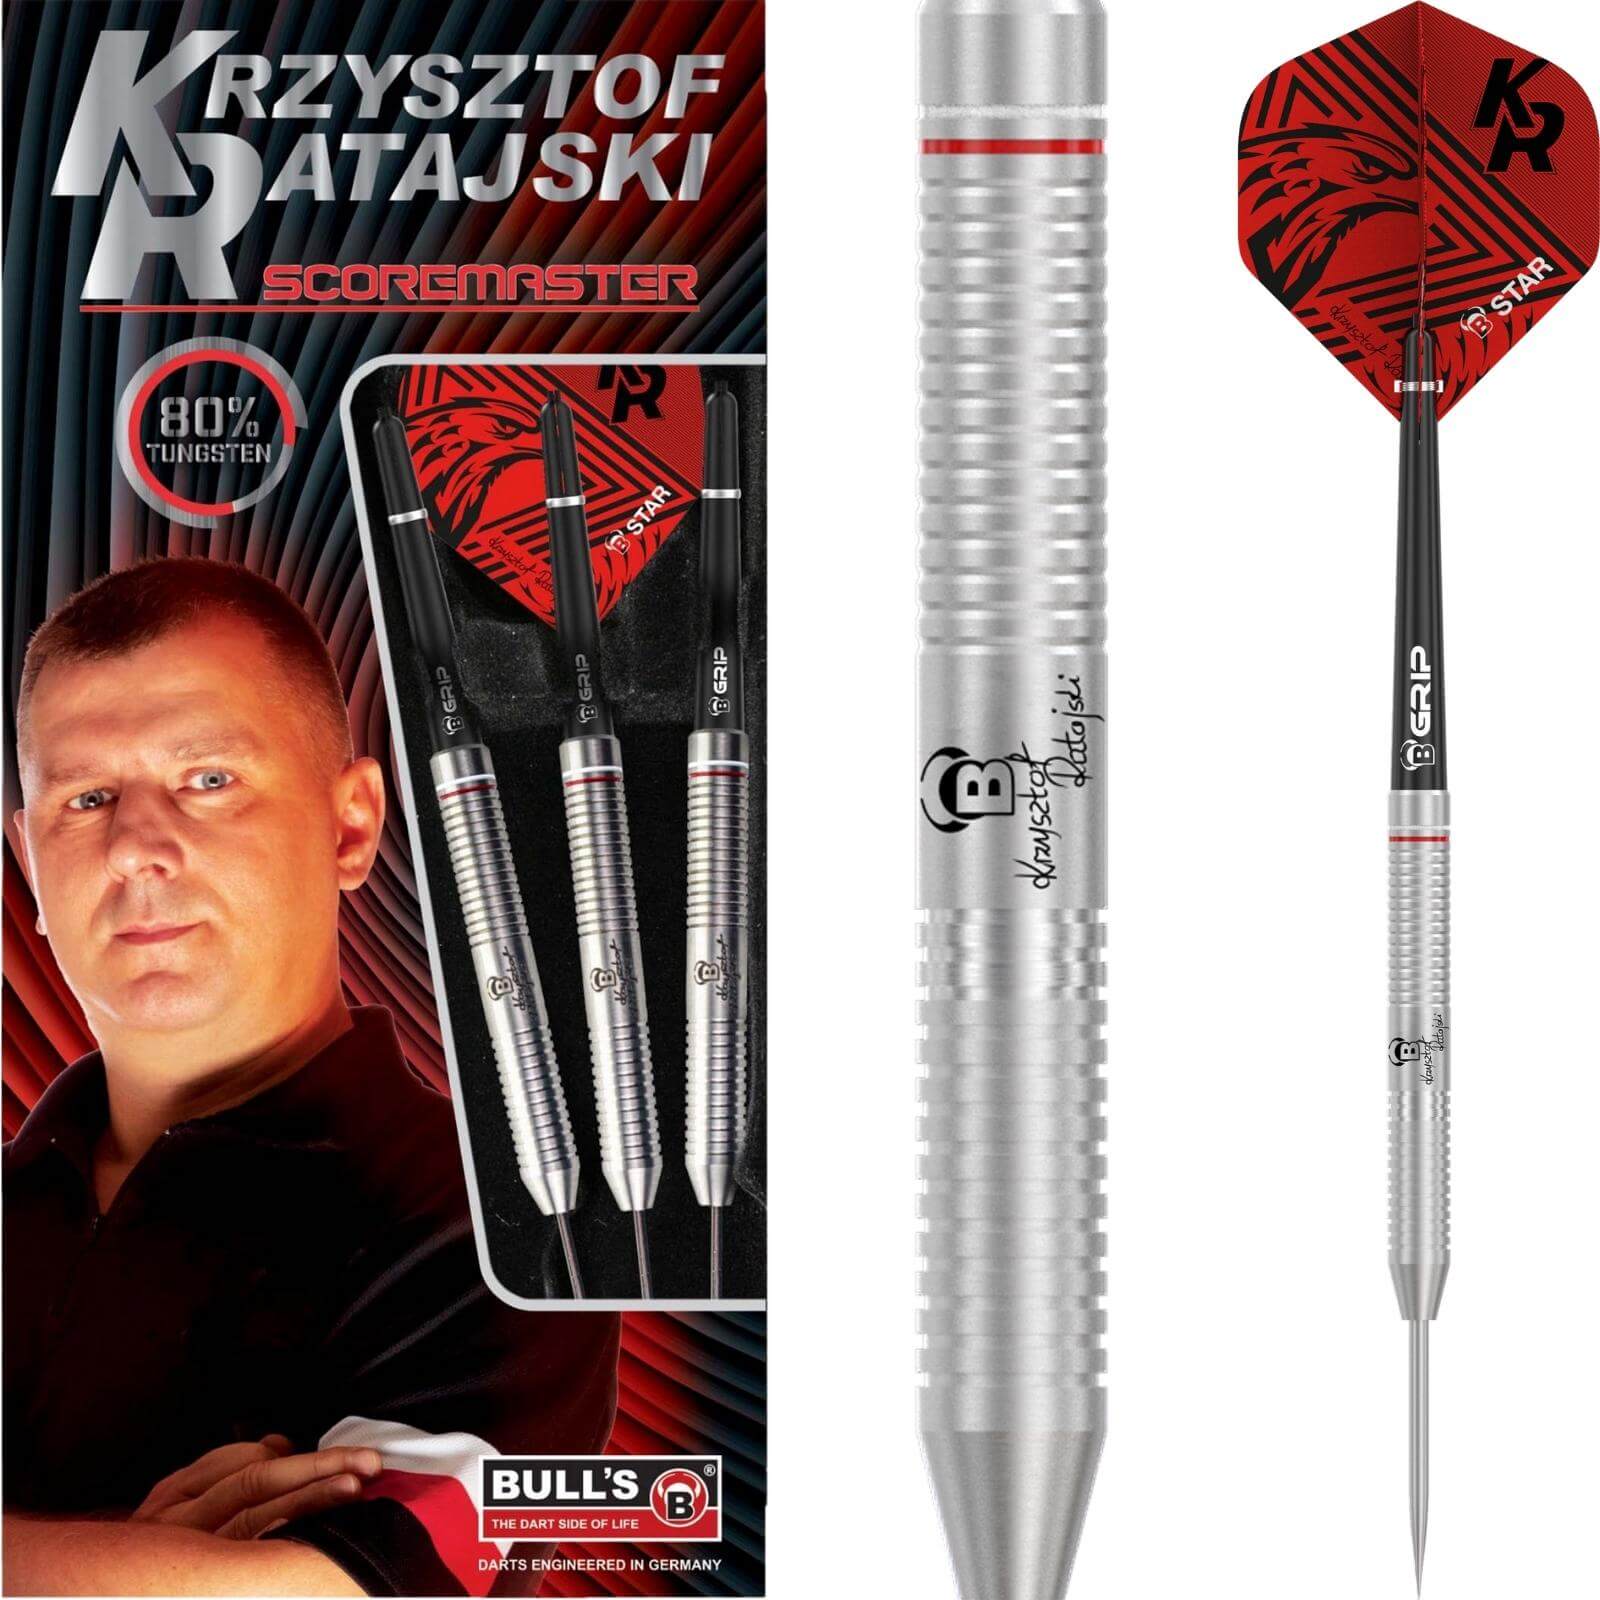 Darts - BULL'S - Krzysztof Ratajski Scoremaster Darts - Steel Tip - 80% Tungsten - 22g 24g 